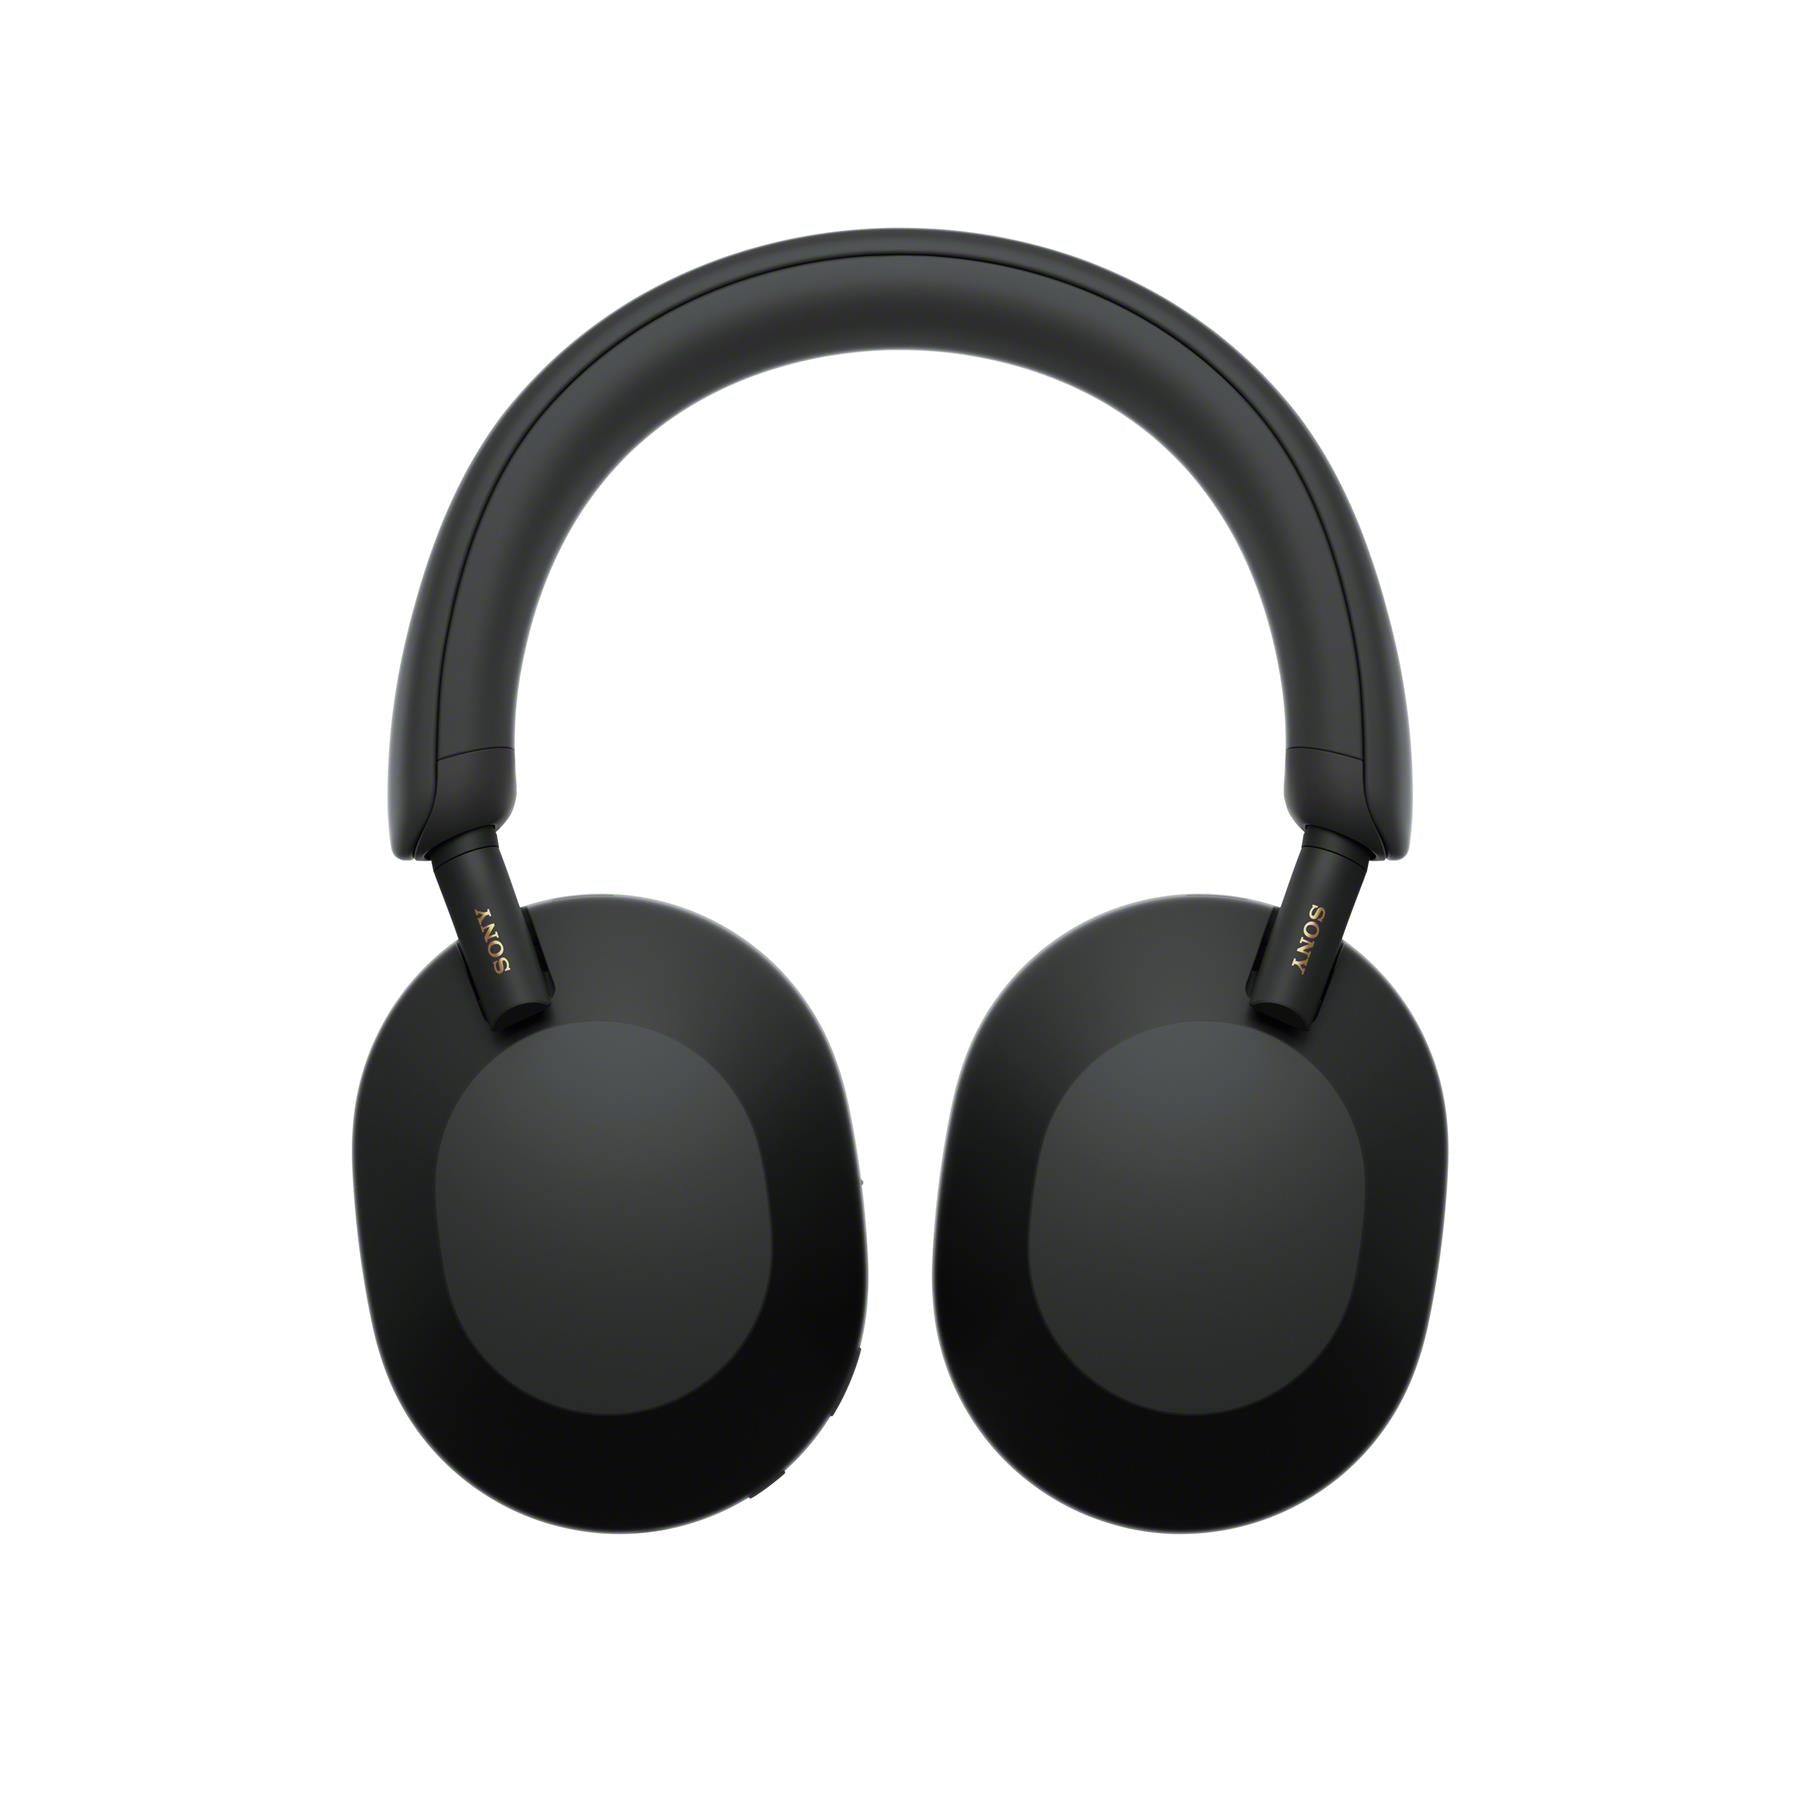 Sony Wireless Noise Canceling Over-the-Ear Headphones